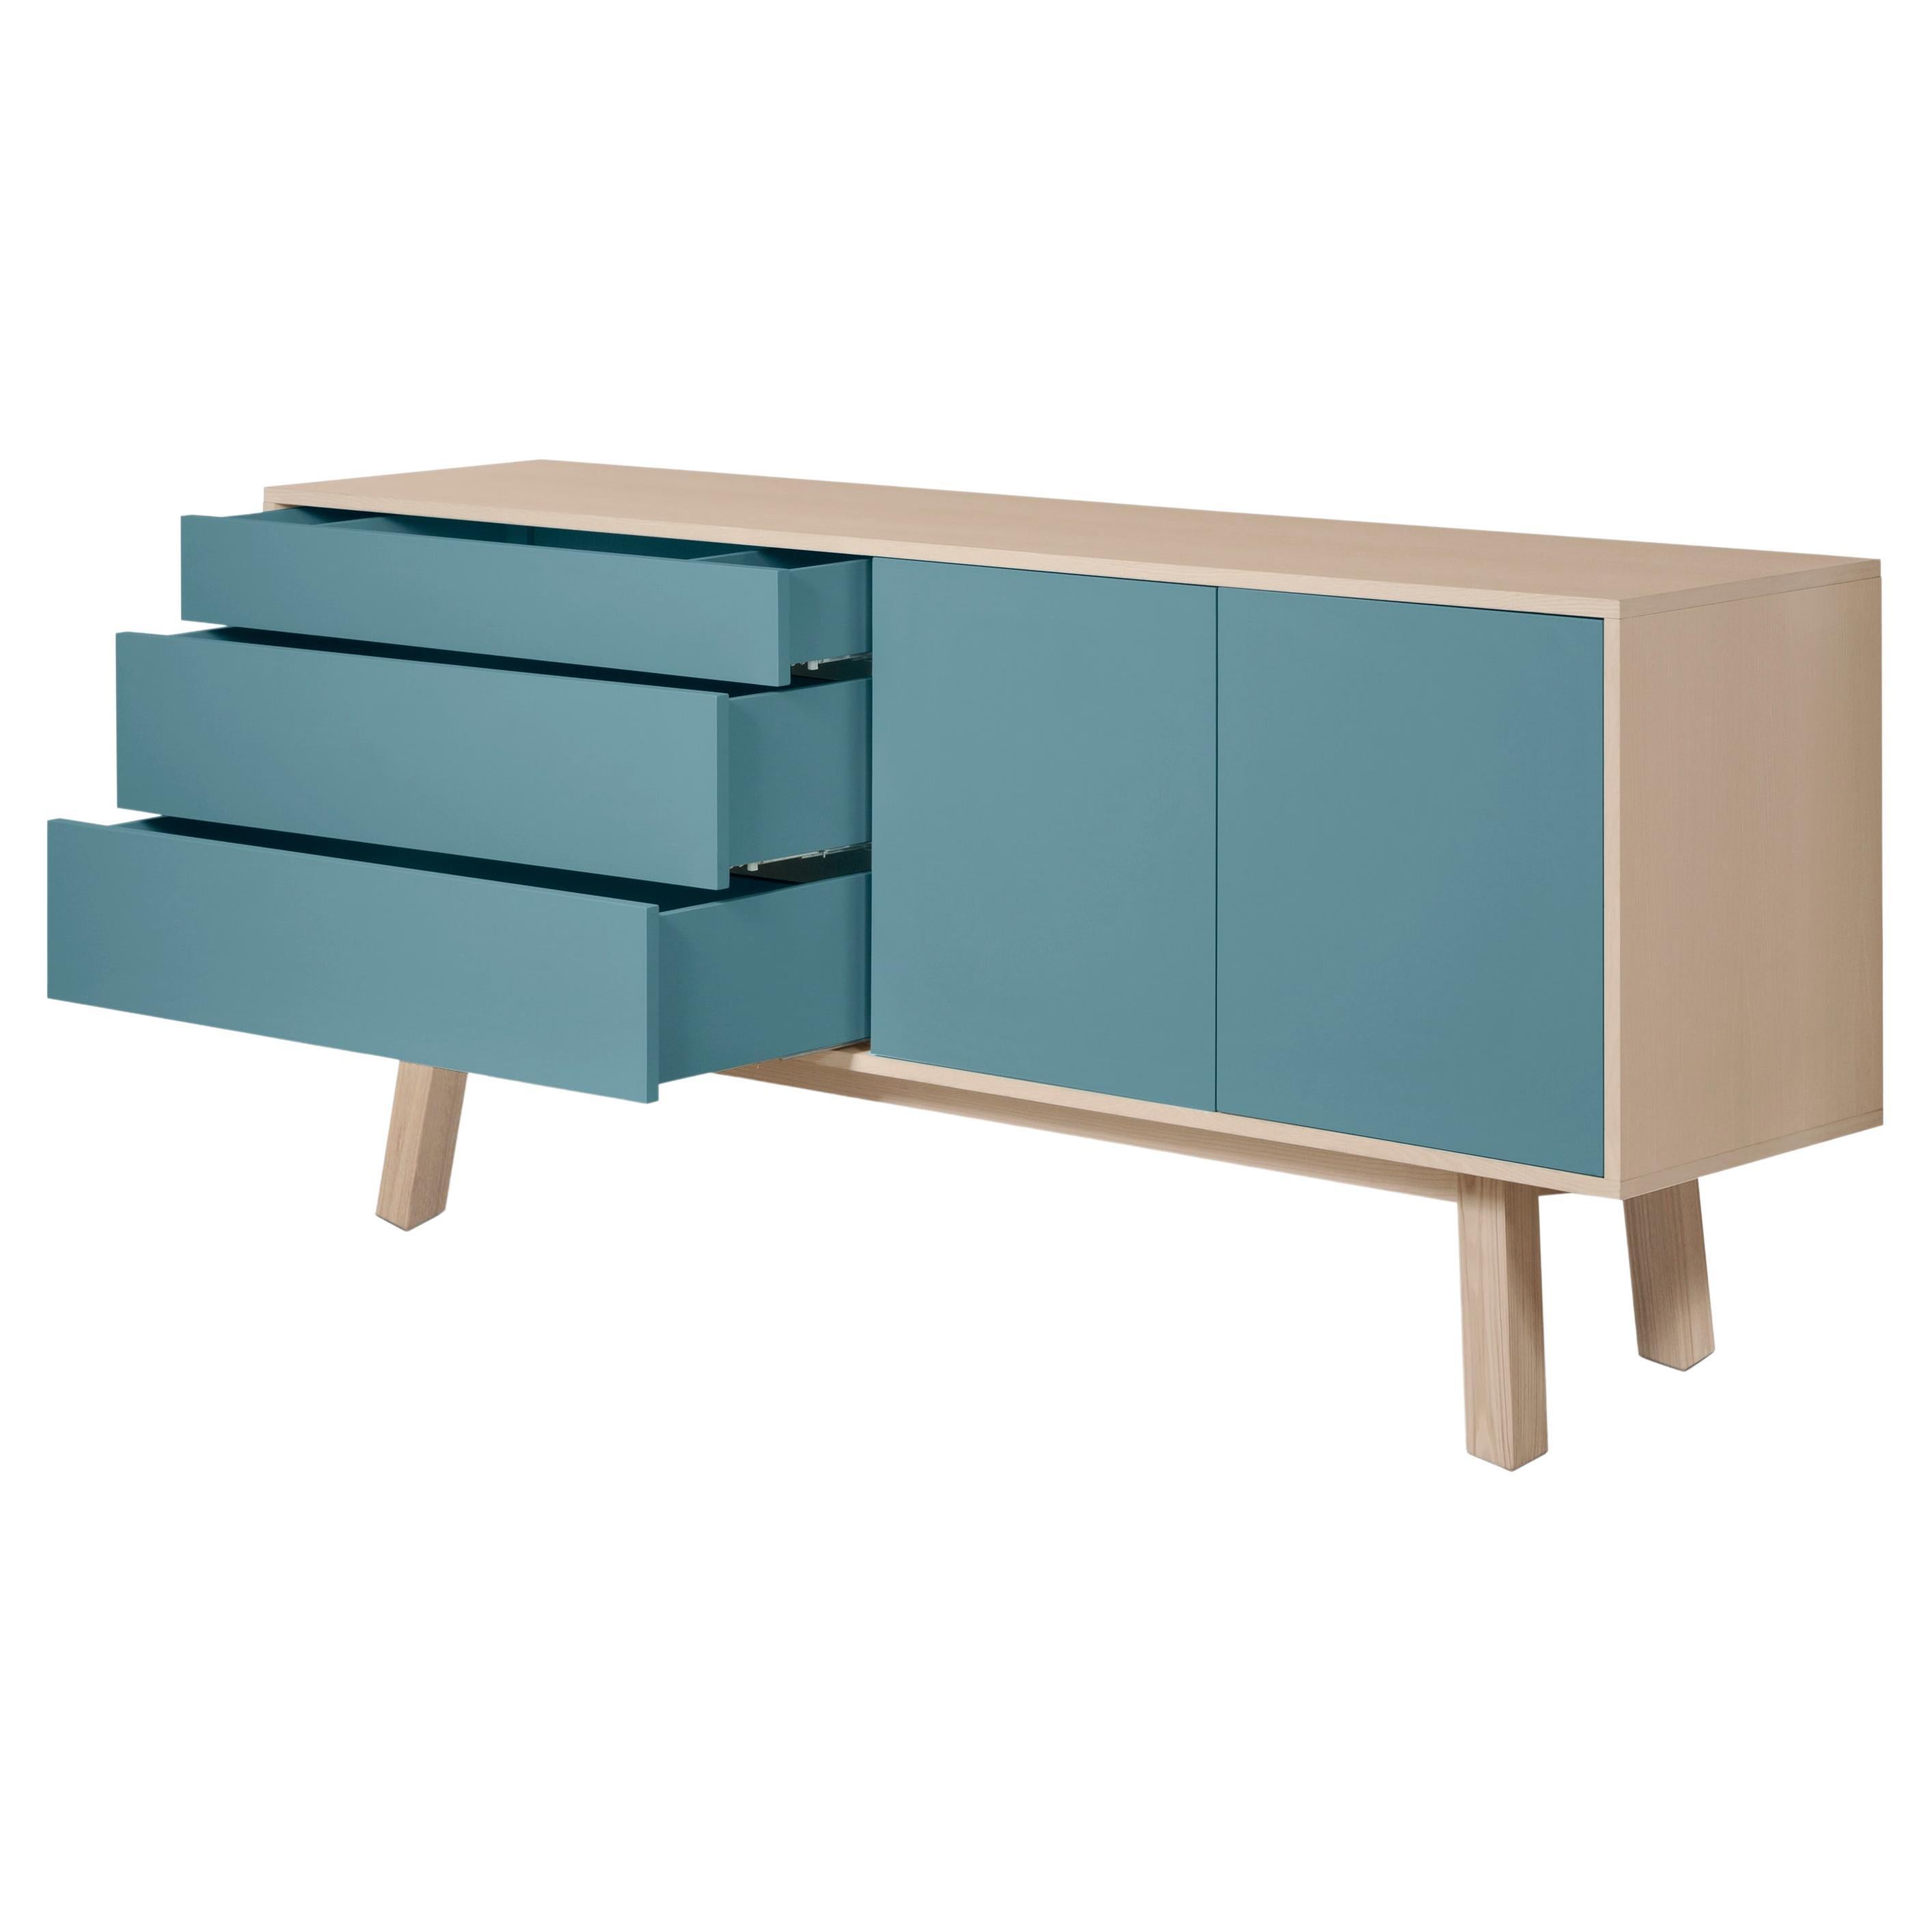 Blaues 2-türen-Buffet mit 3 Schubladen aus Eschenholz, Design Eric Gizard – Paris